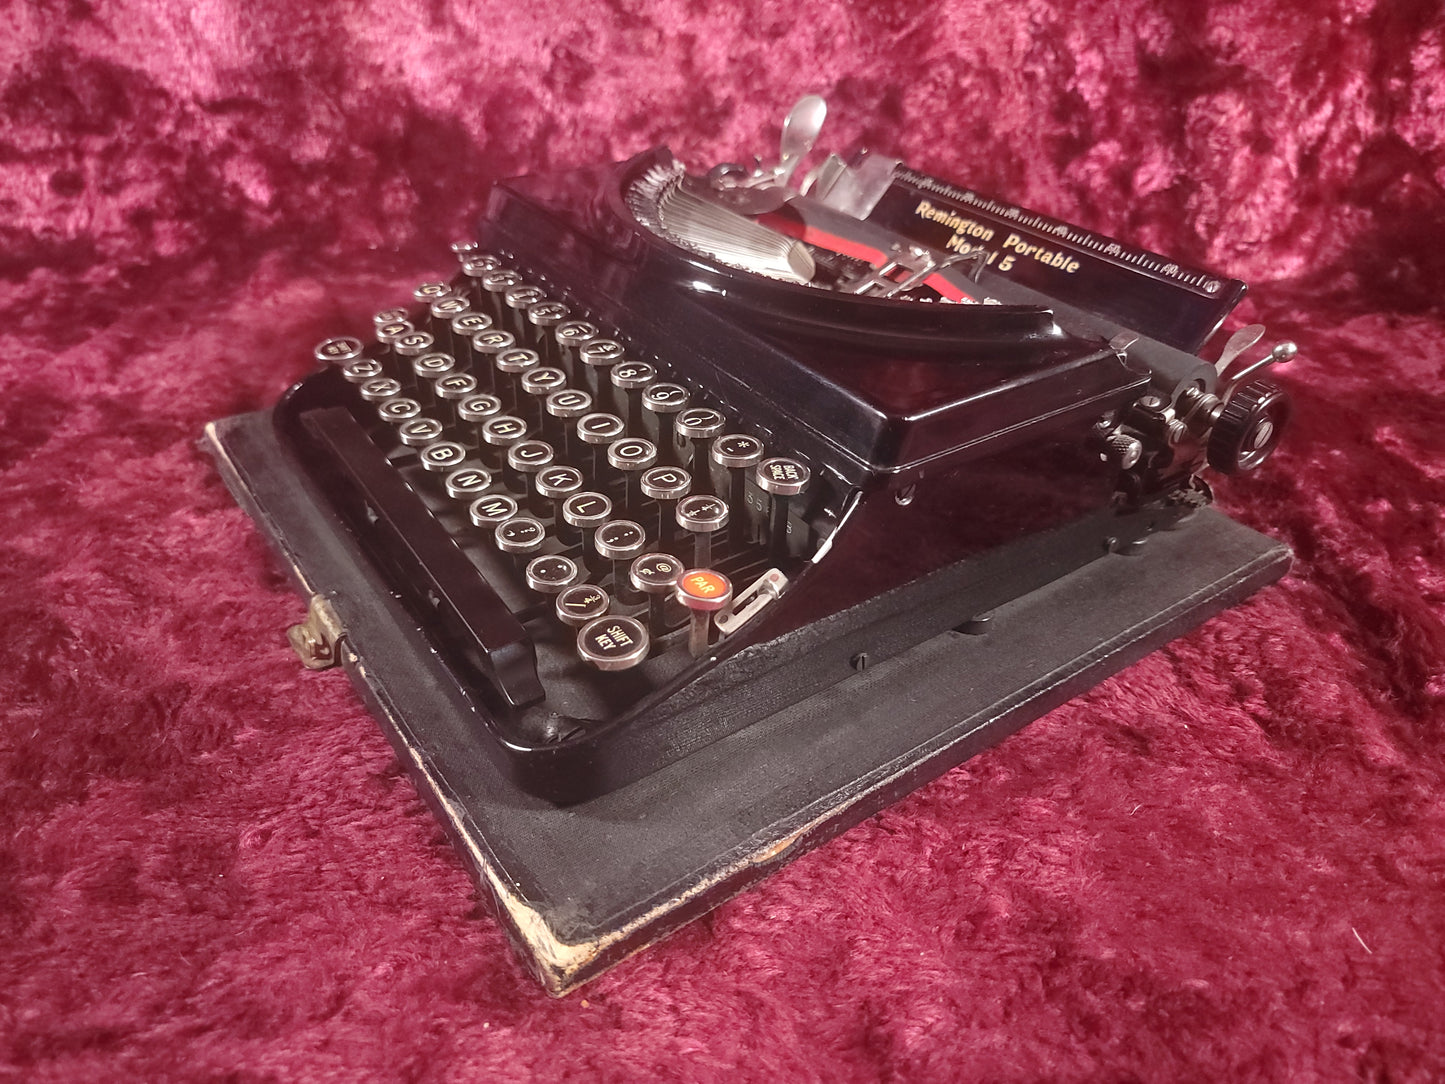 Remington Portable Model 5 Manual Portable Typewriter with Case, 1934